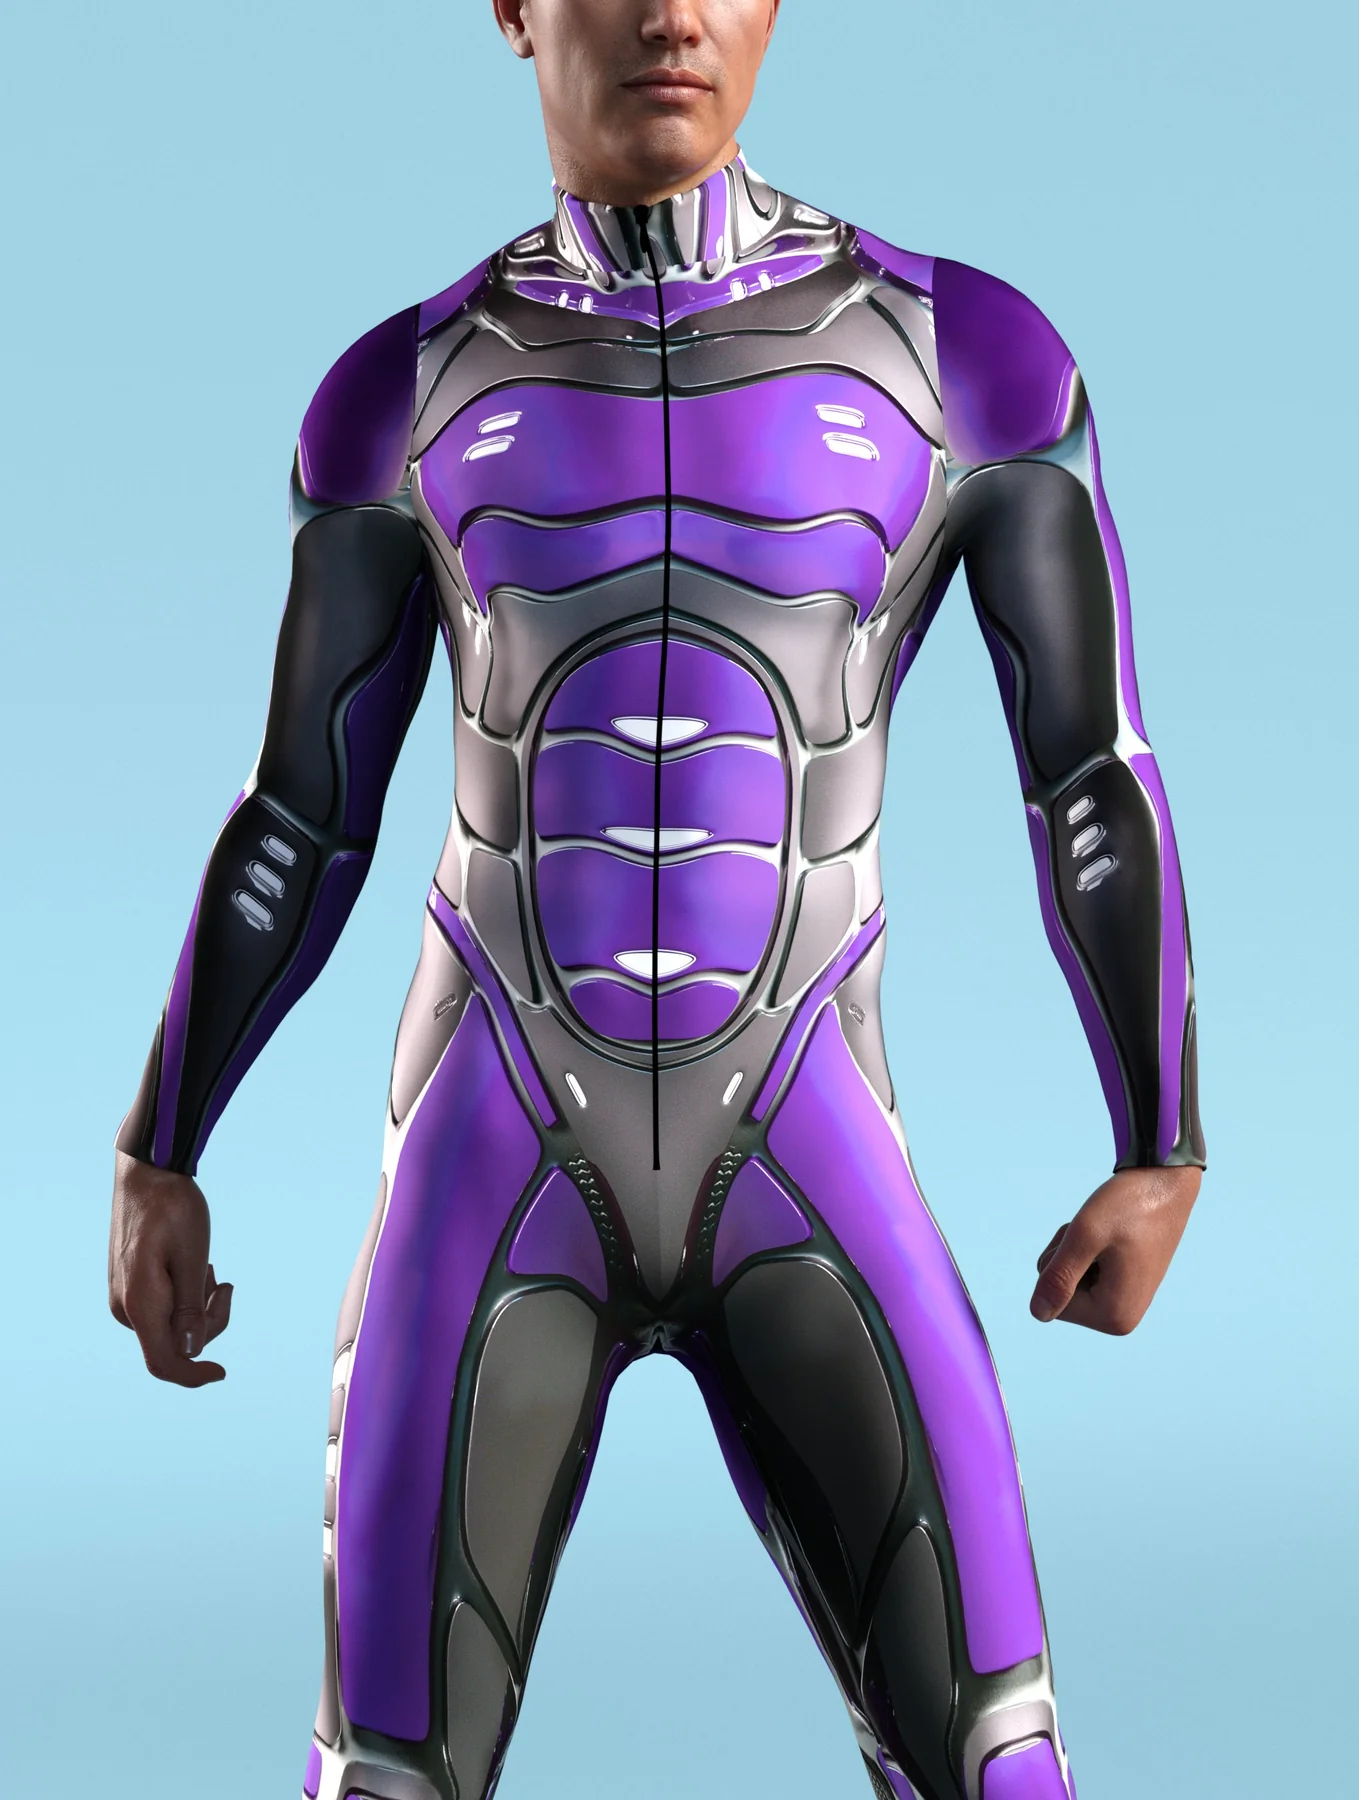 The Purple Storm Male Costume